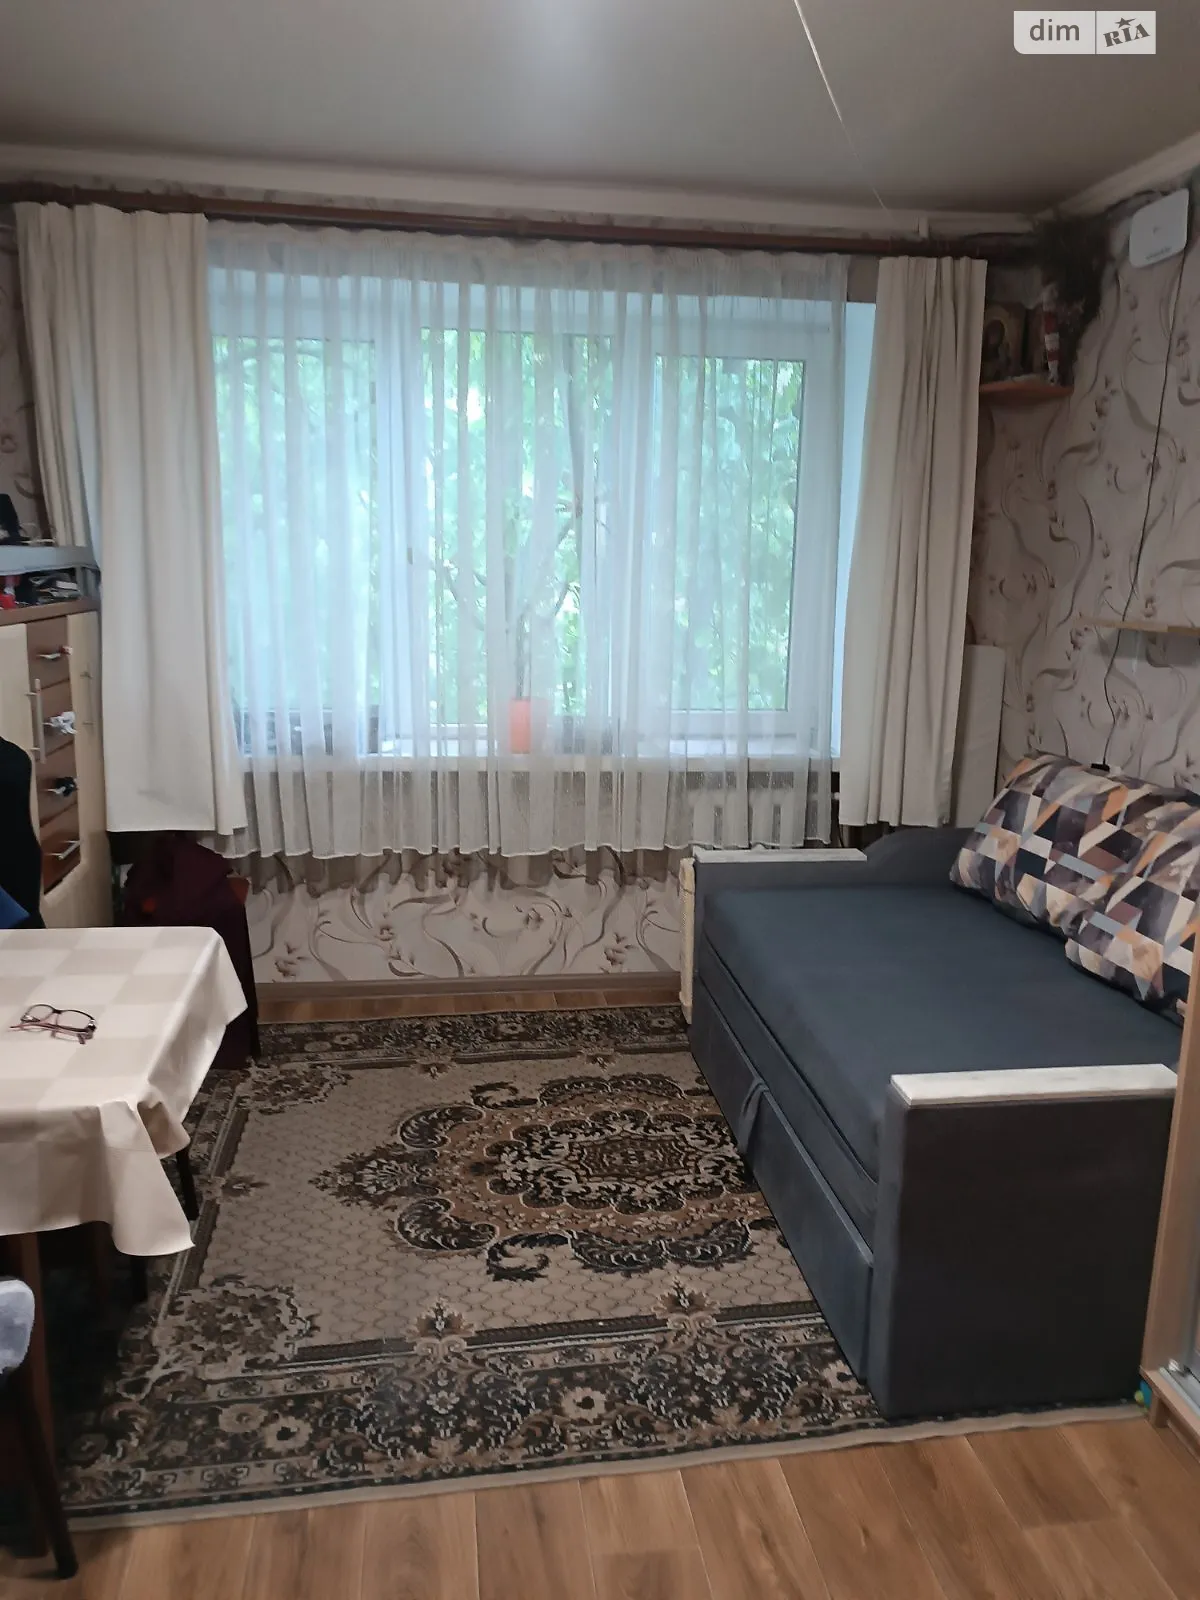 Продается комната 18 кв. м в Одессе, цена: 9500 $ - фото 1